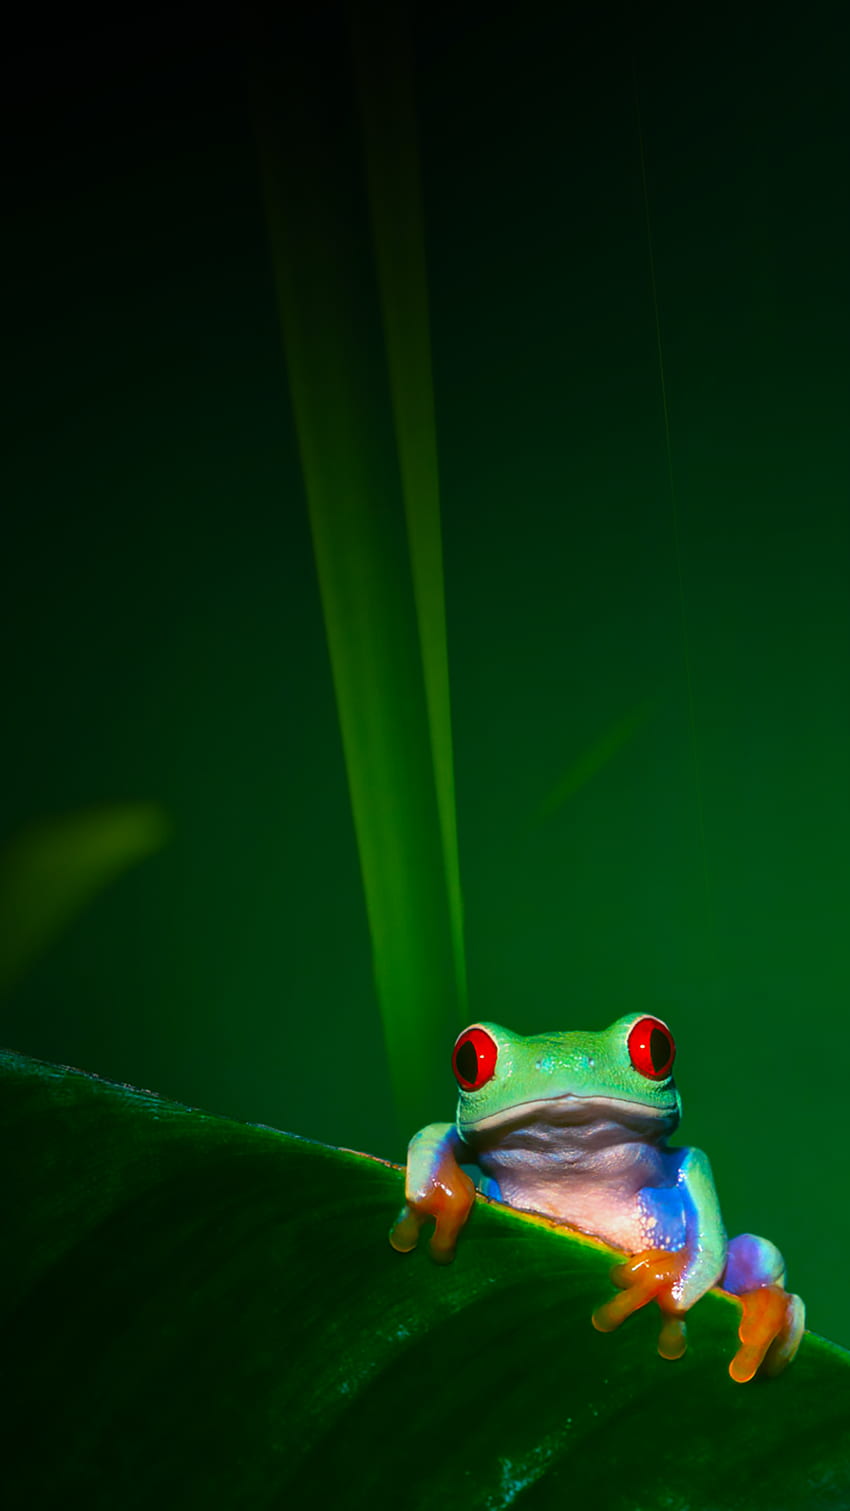 Ƒ↑탭하고 앱을 받으세요! Art Creative Nature Frog 녹색 빨간 눈 iPhone 6 Plus . 개구리, 아이폰, 아이폰 러브, 청개구리 HD 전화 배경 화면